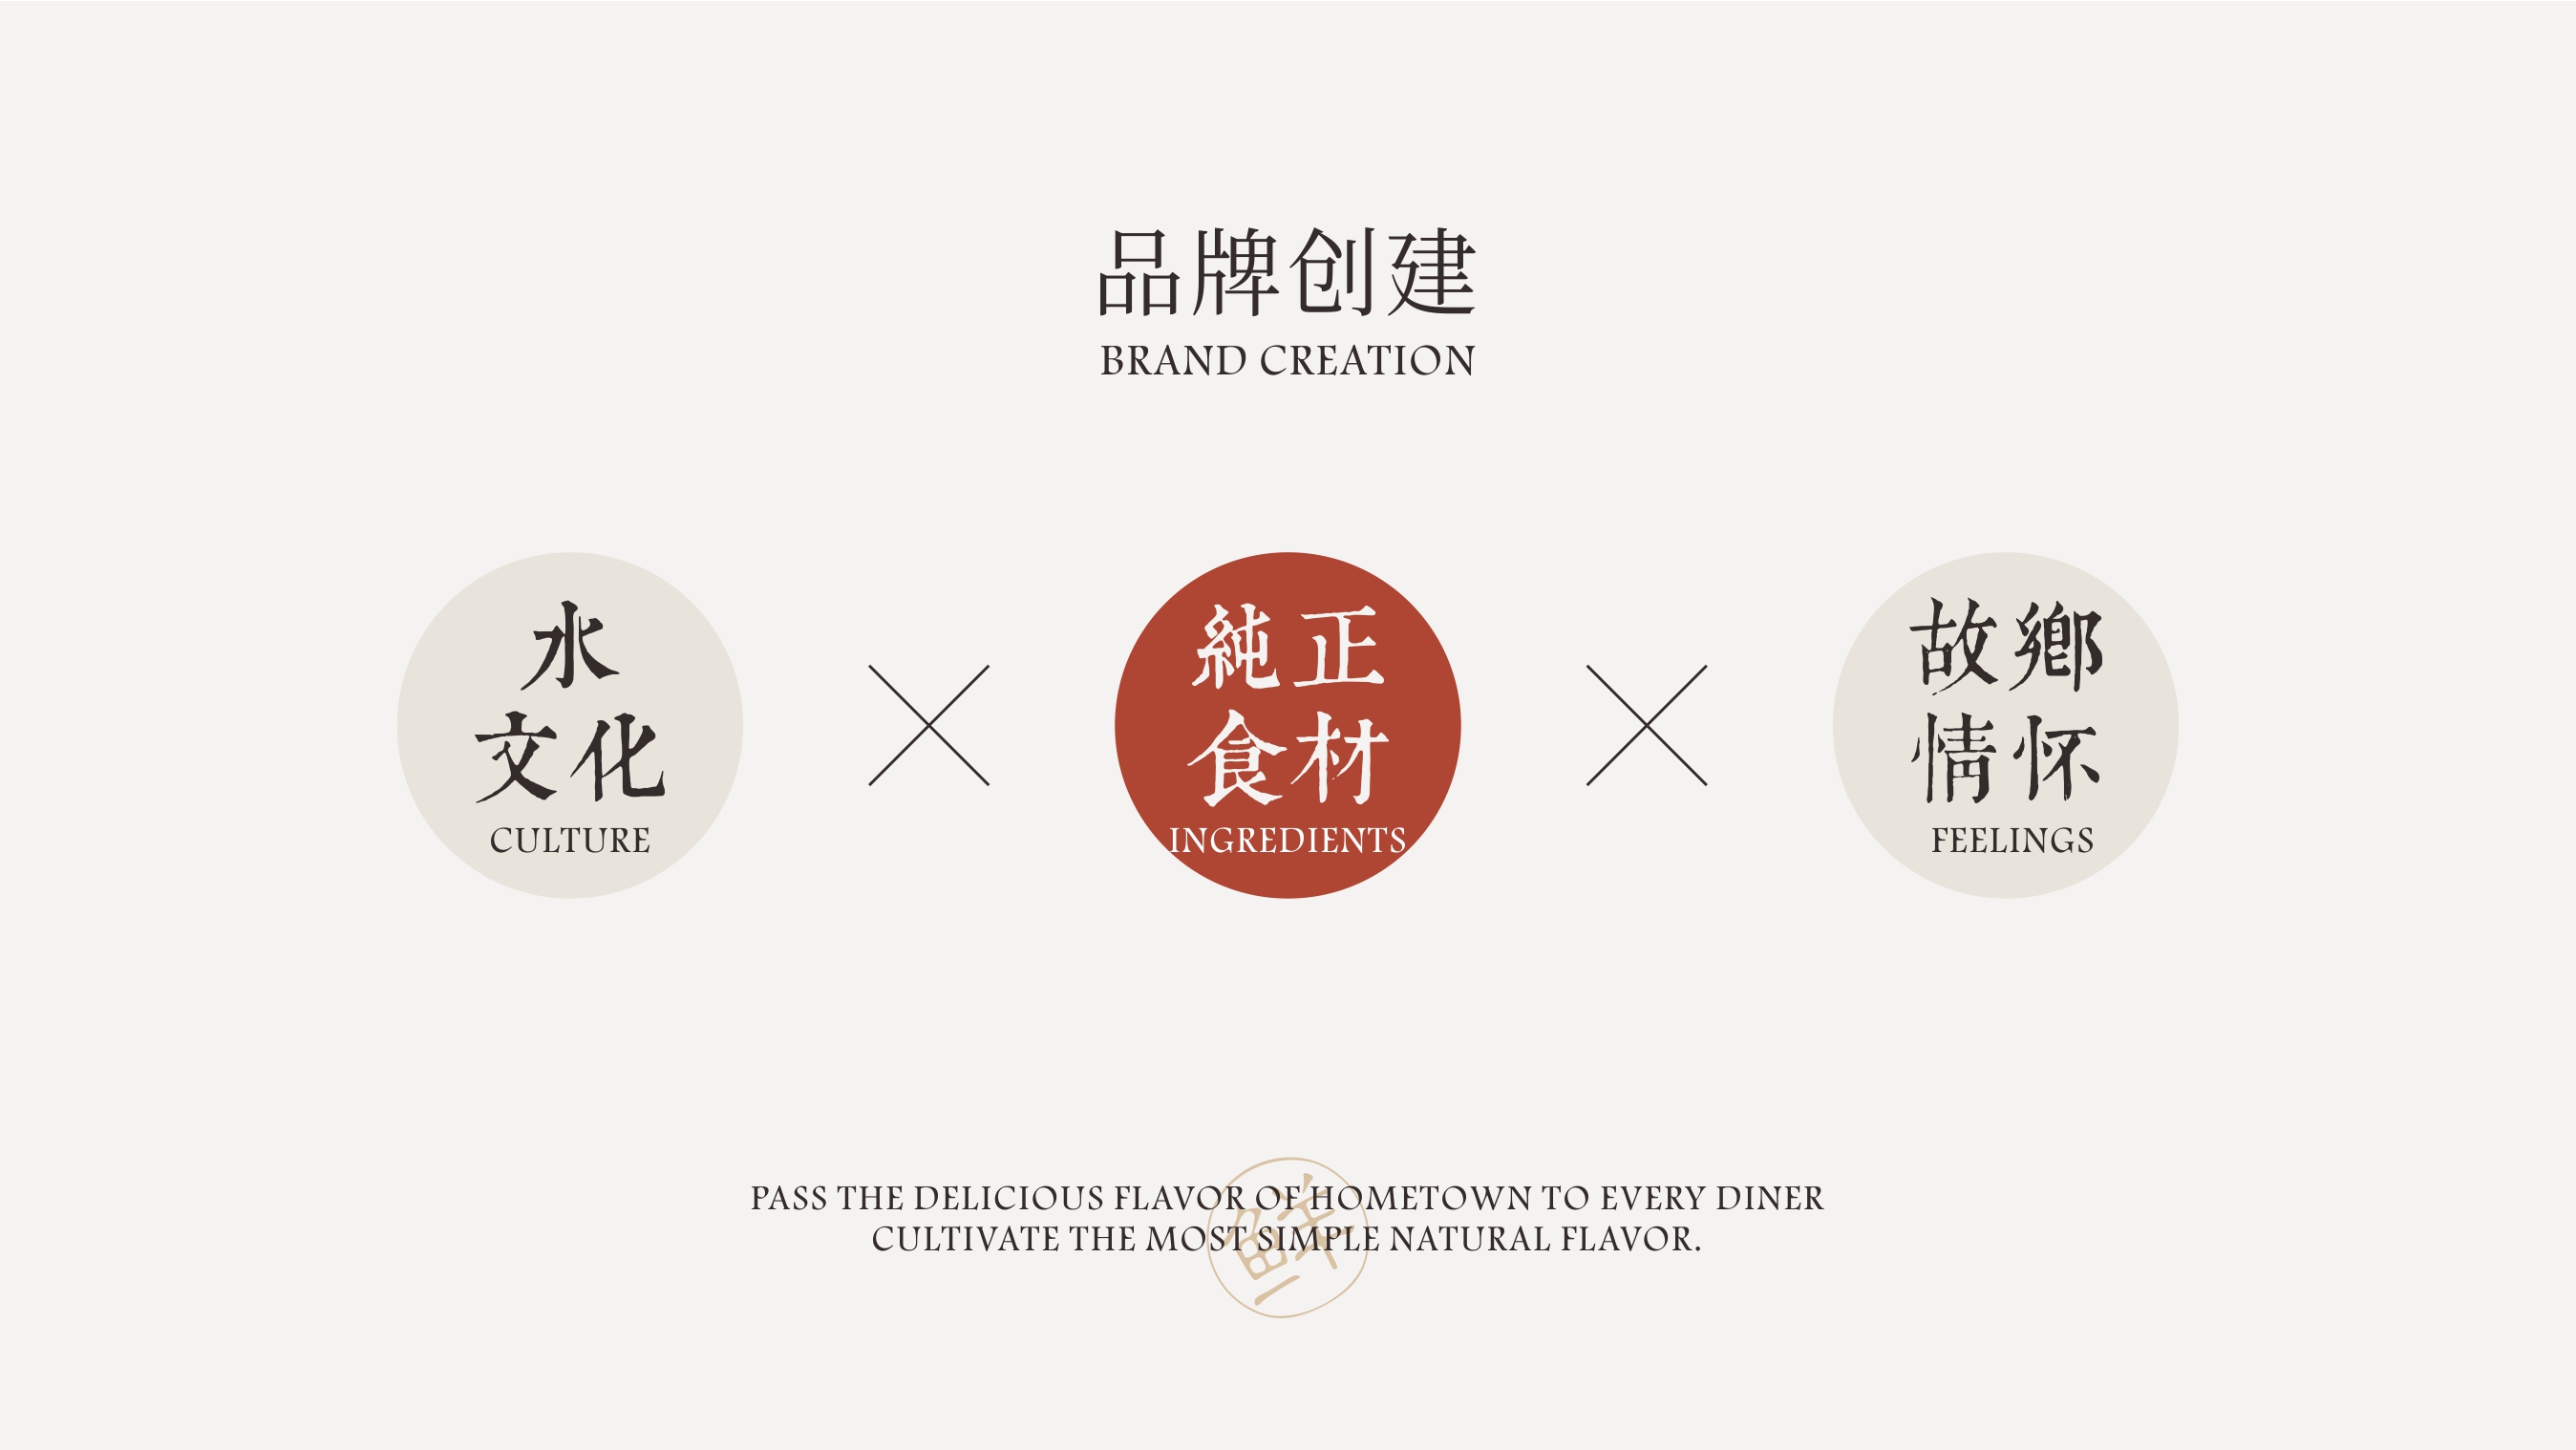 18P Restaurant Design Scheme Containing Chinese Culture